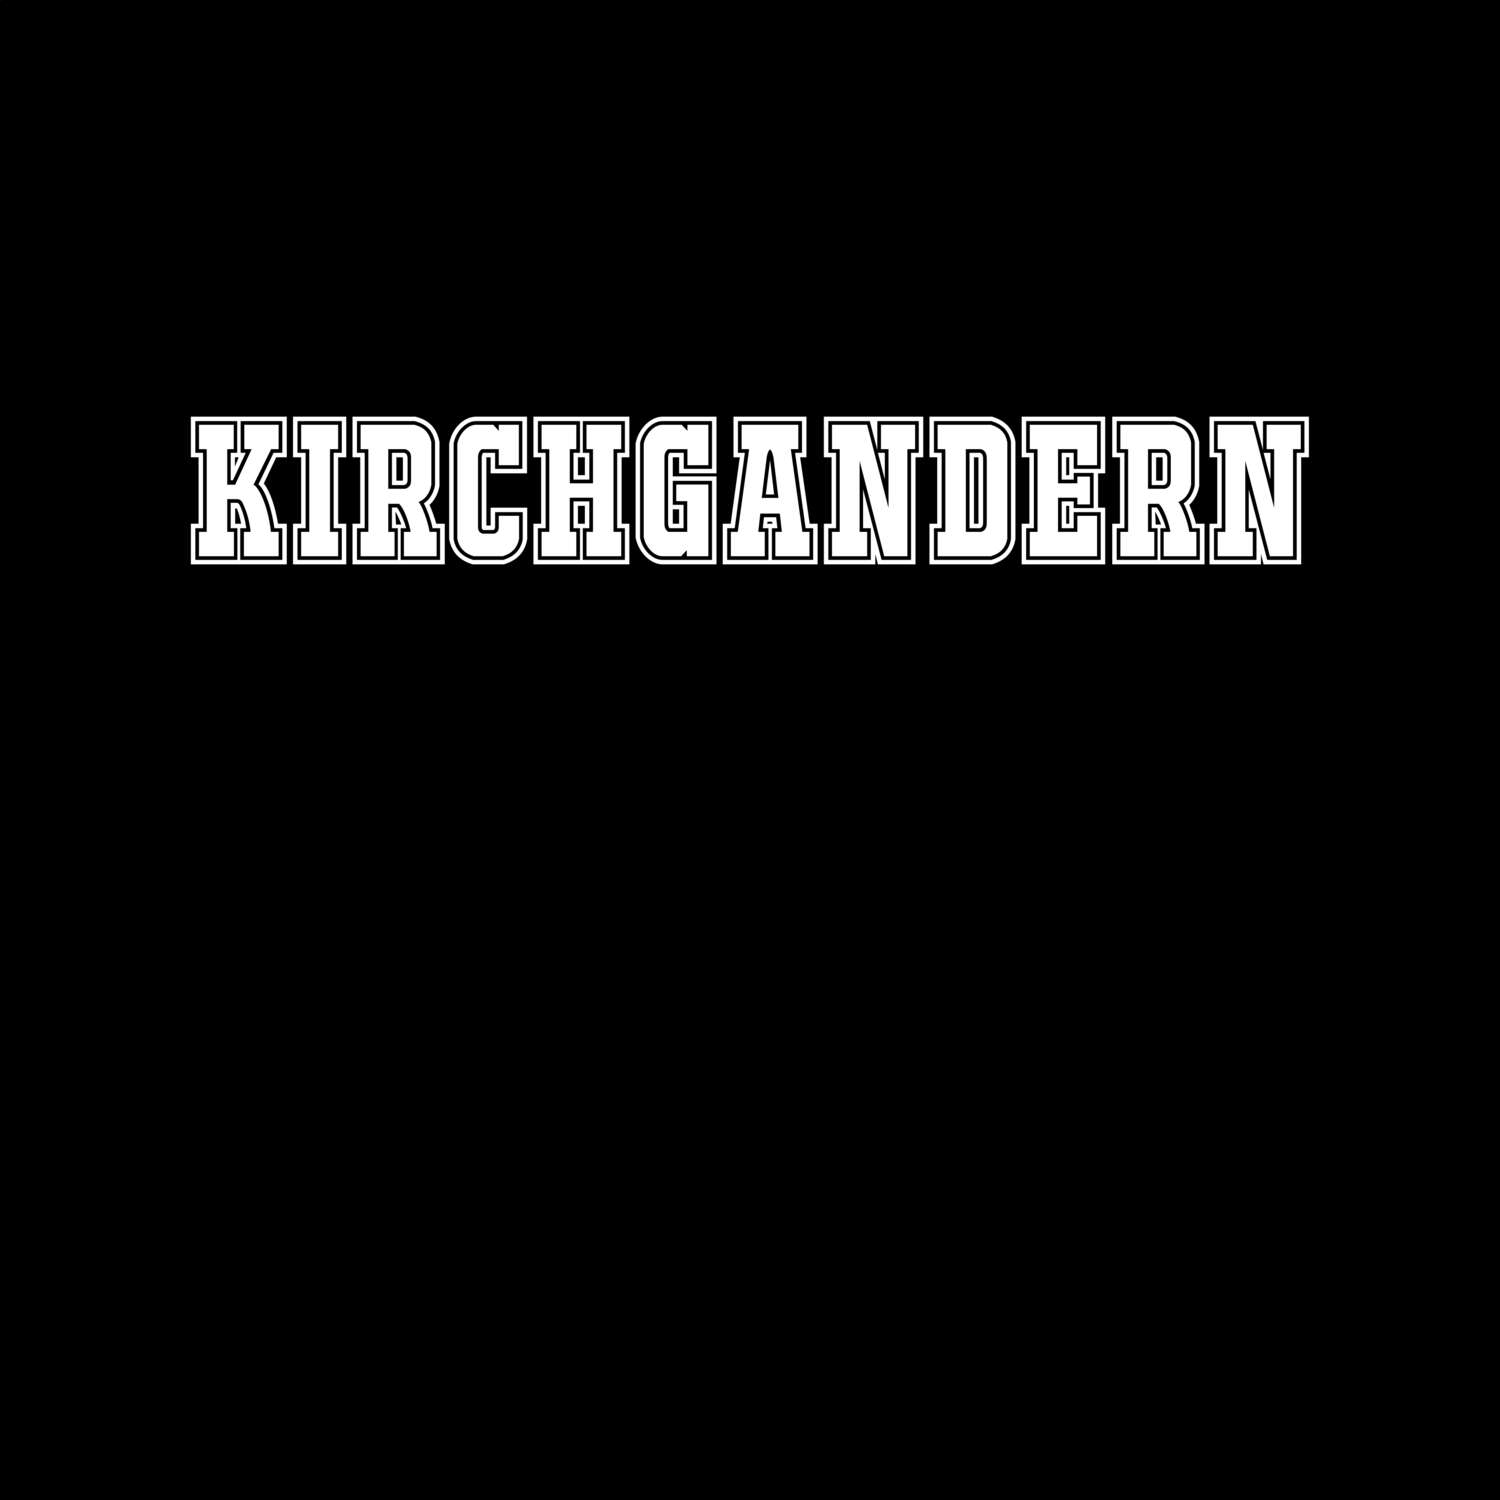 Kirchgandern T-Shirt »Classic«